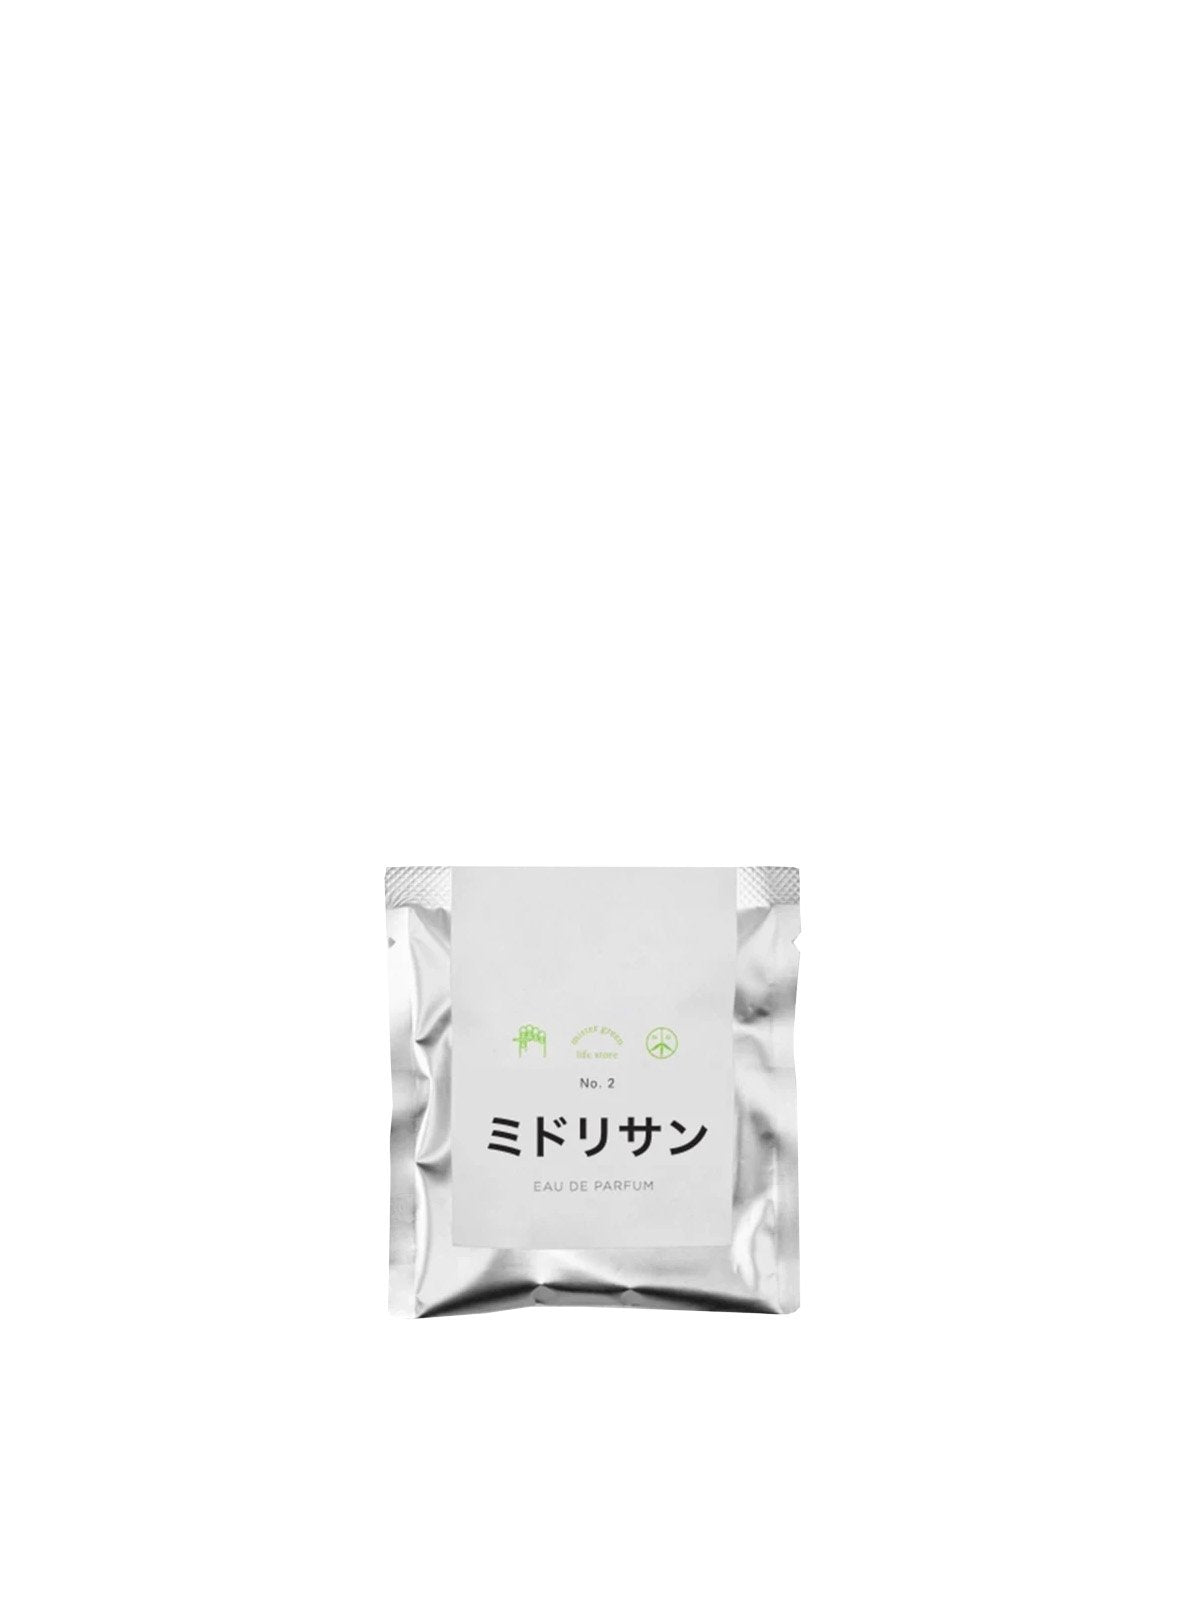 Fragrance No. 2 - ミドリサン (Midori-San) - Starter